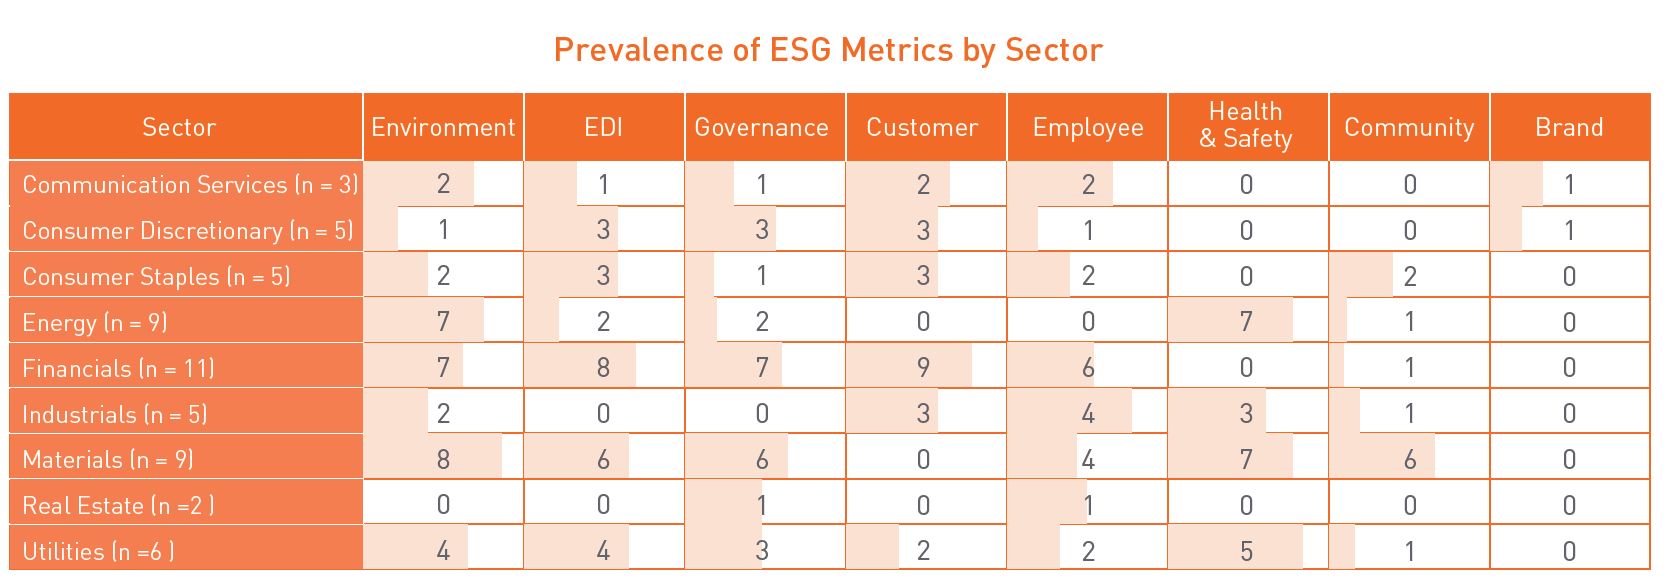 Prevalence of ESG Metrics by Sector